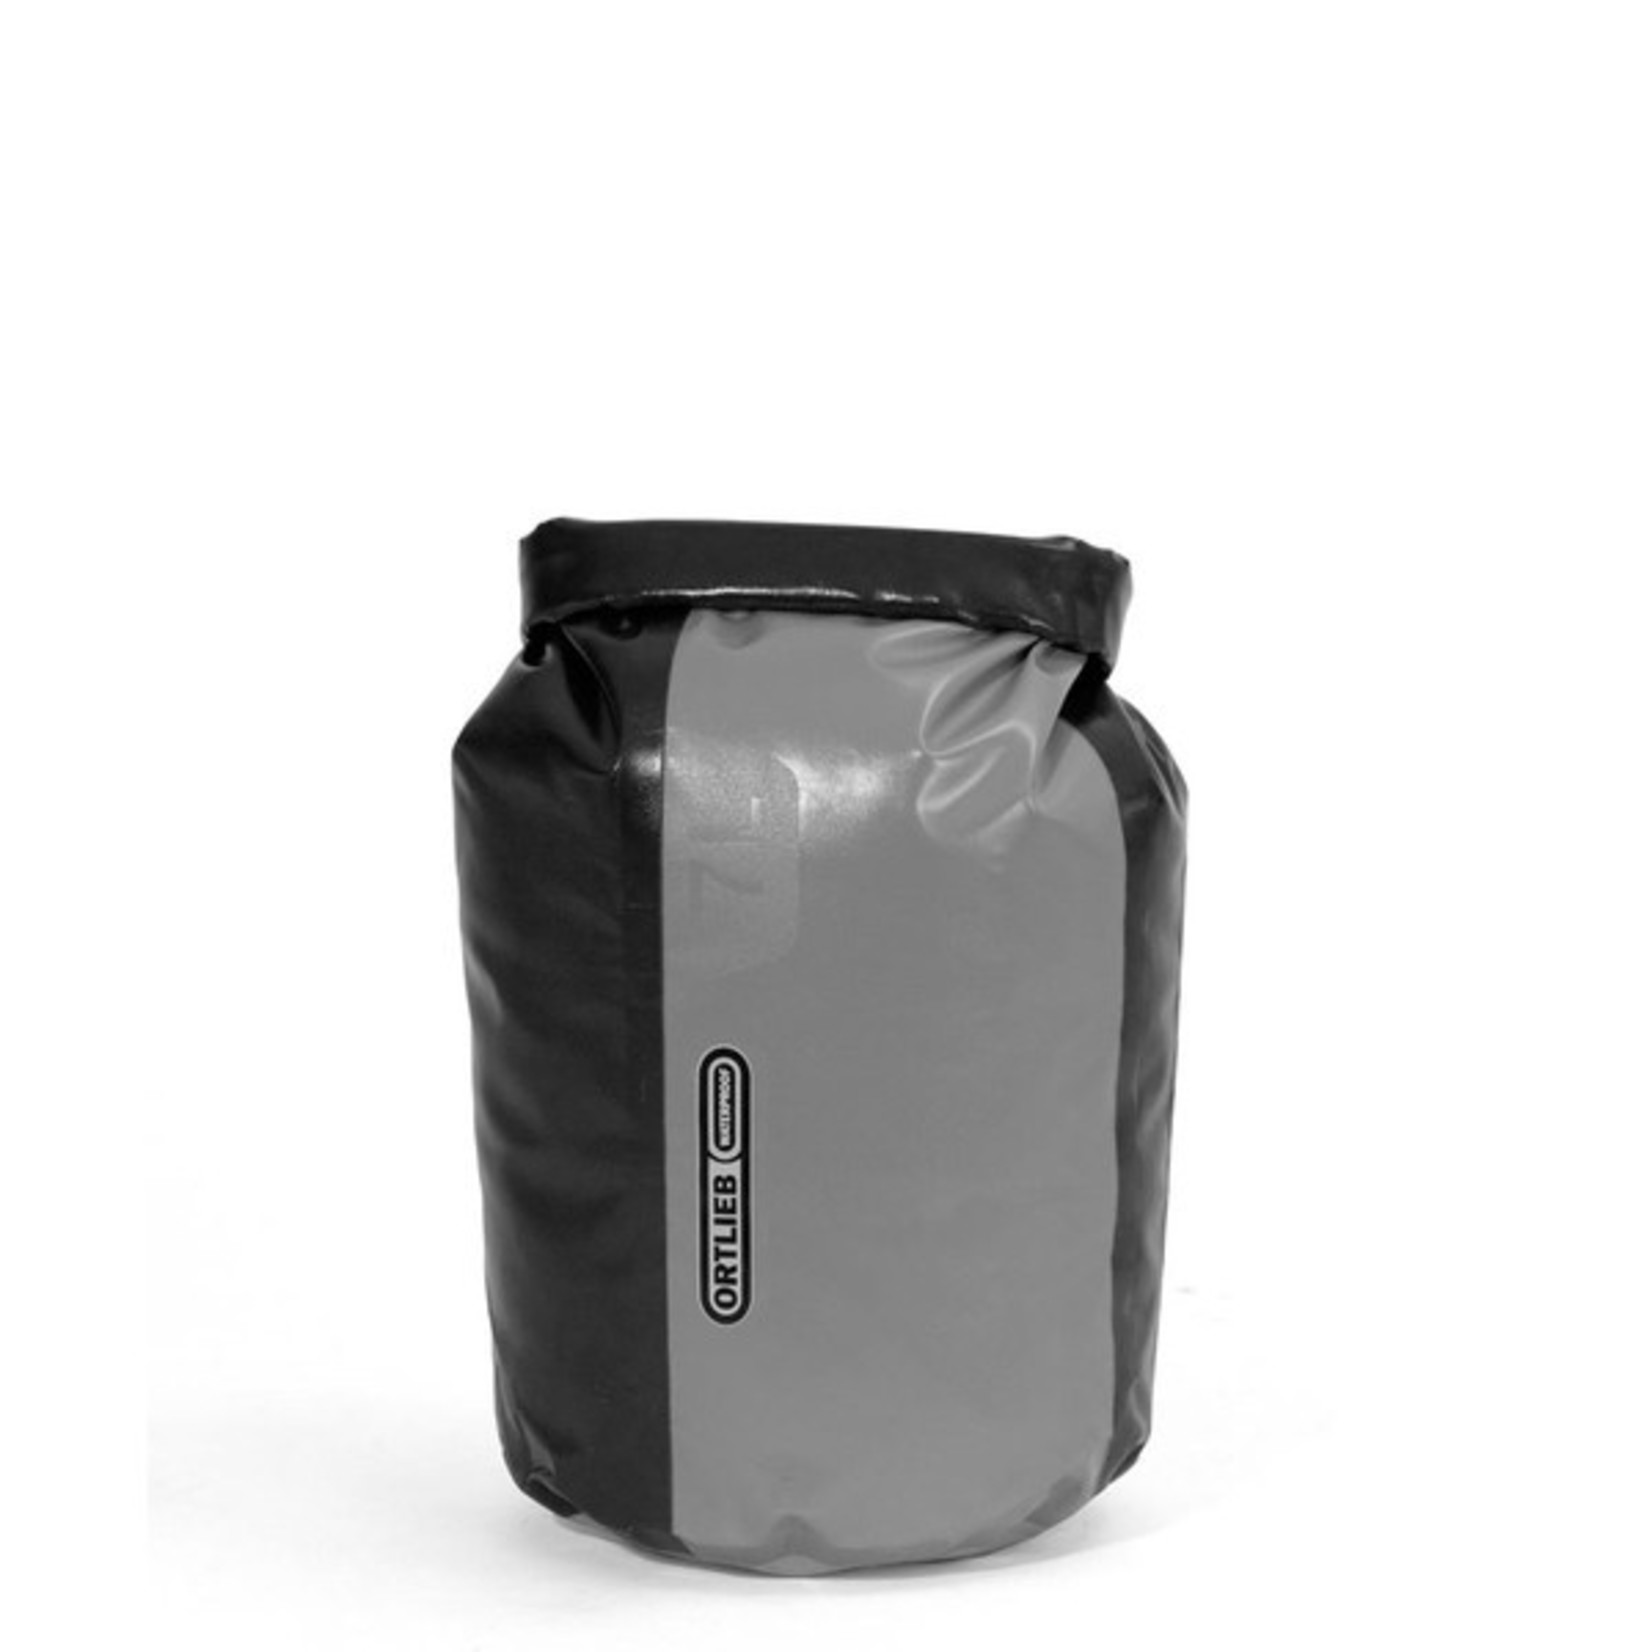 Ortlieb New Ortlieb PD 350 Dry Bag K4151 - 15-20cm/5-8Inch - 7L Black-Slate